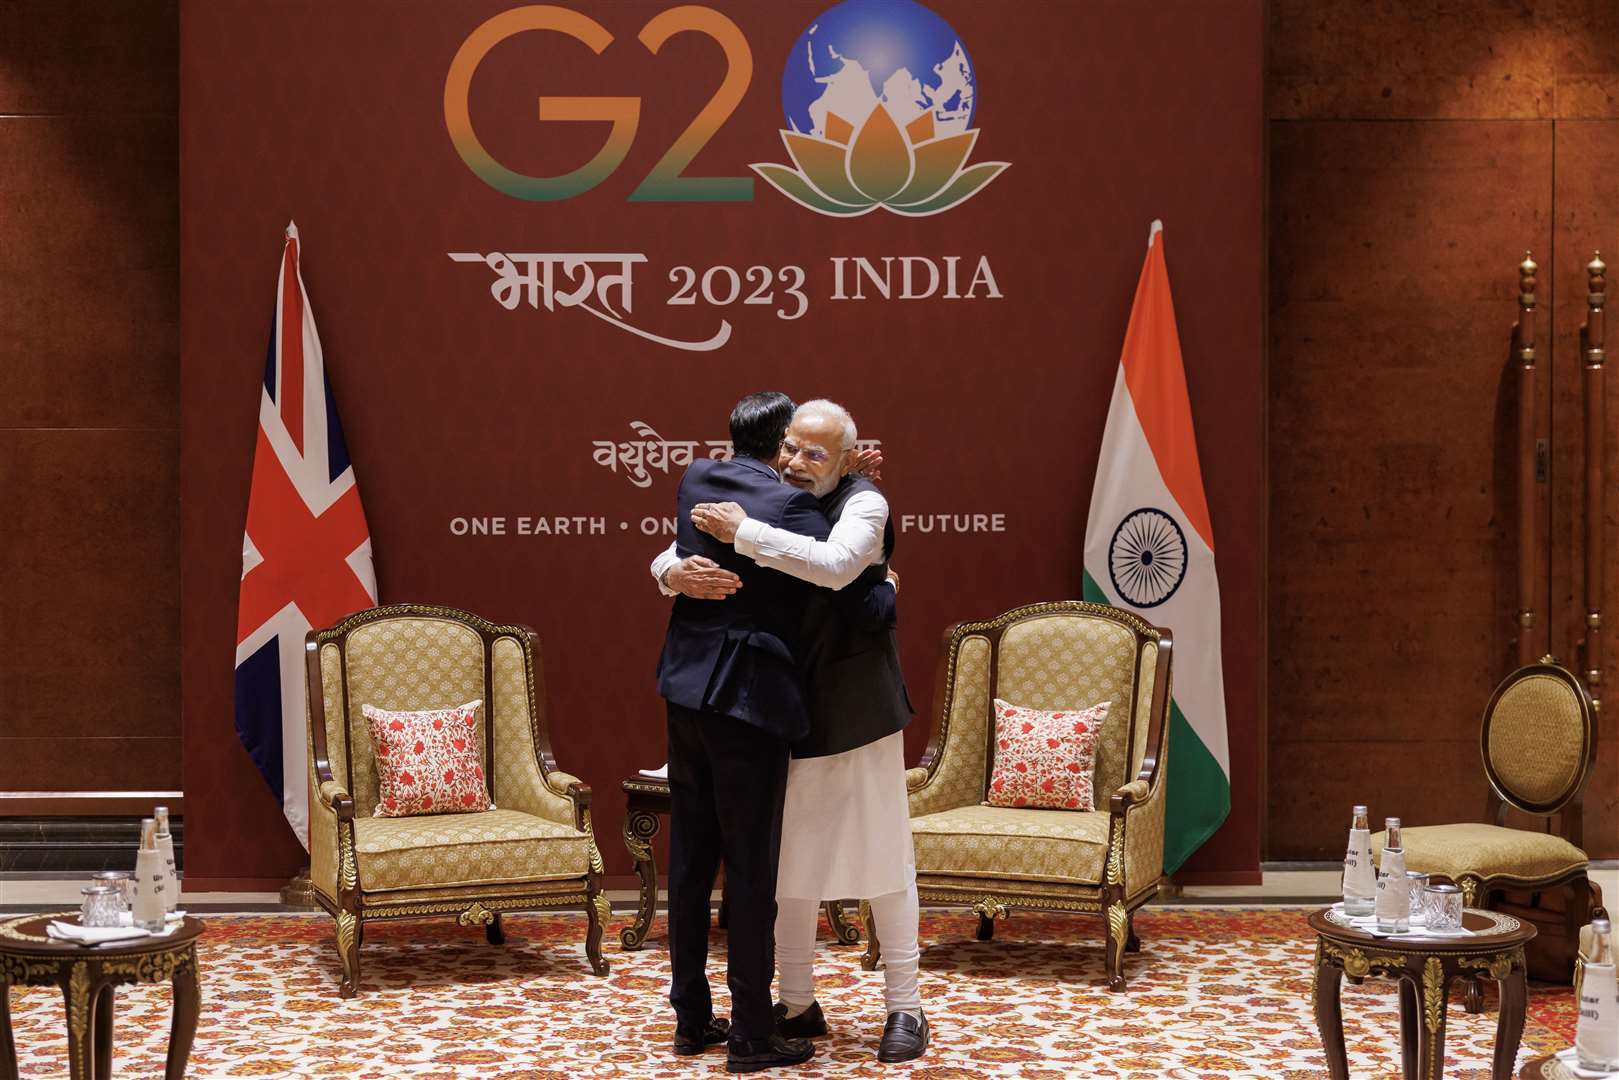 Prime Minister Rishi Sunak hugs his Indian counterpart, Narendra Modi, during the G20 summit in New Delhi this month (Dan Kitwood/PA)